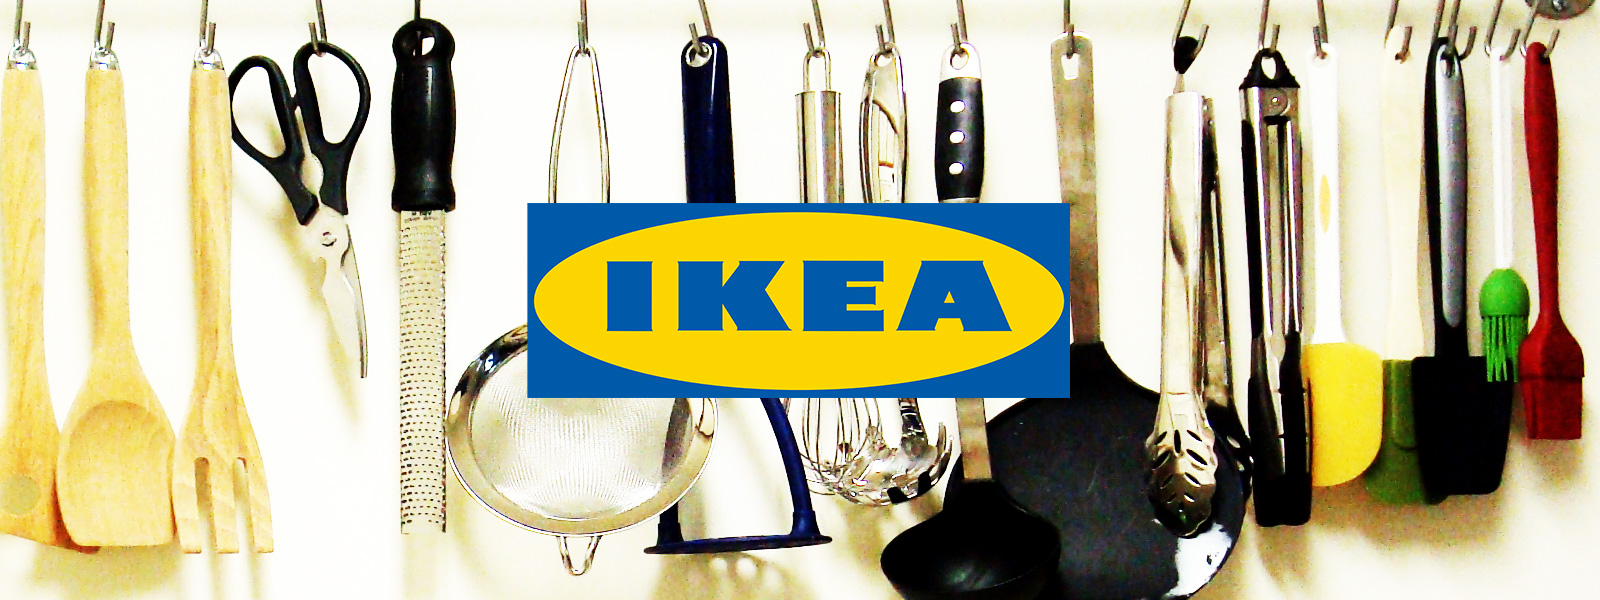 IKEA - Küchen | rentahess